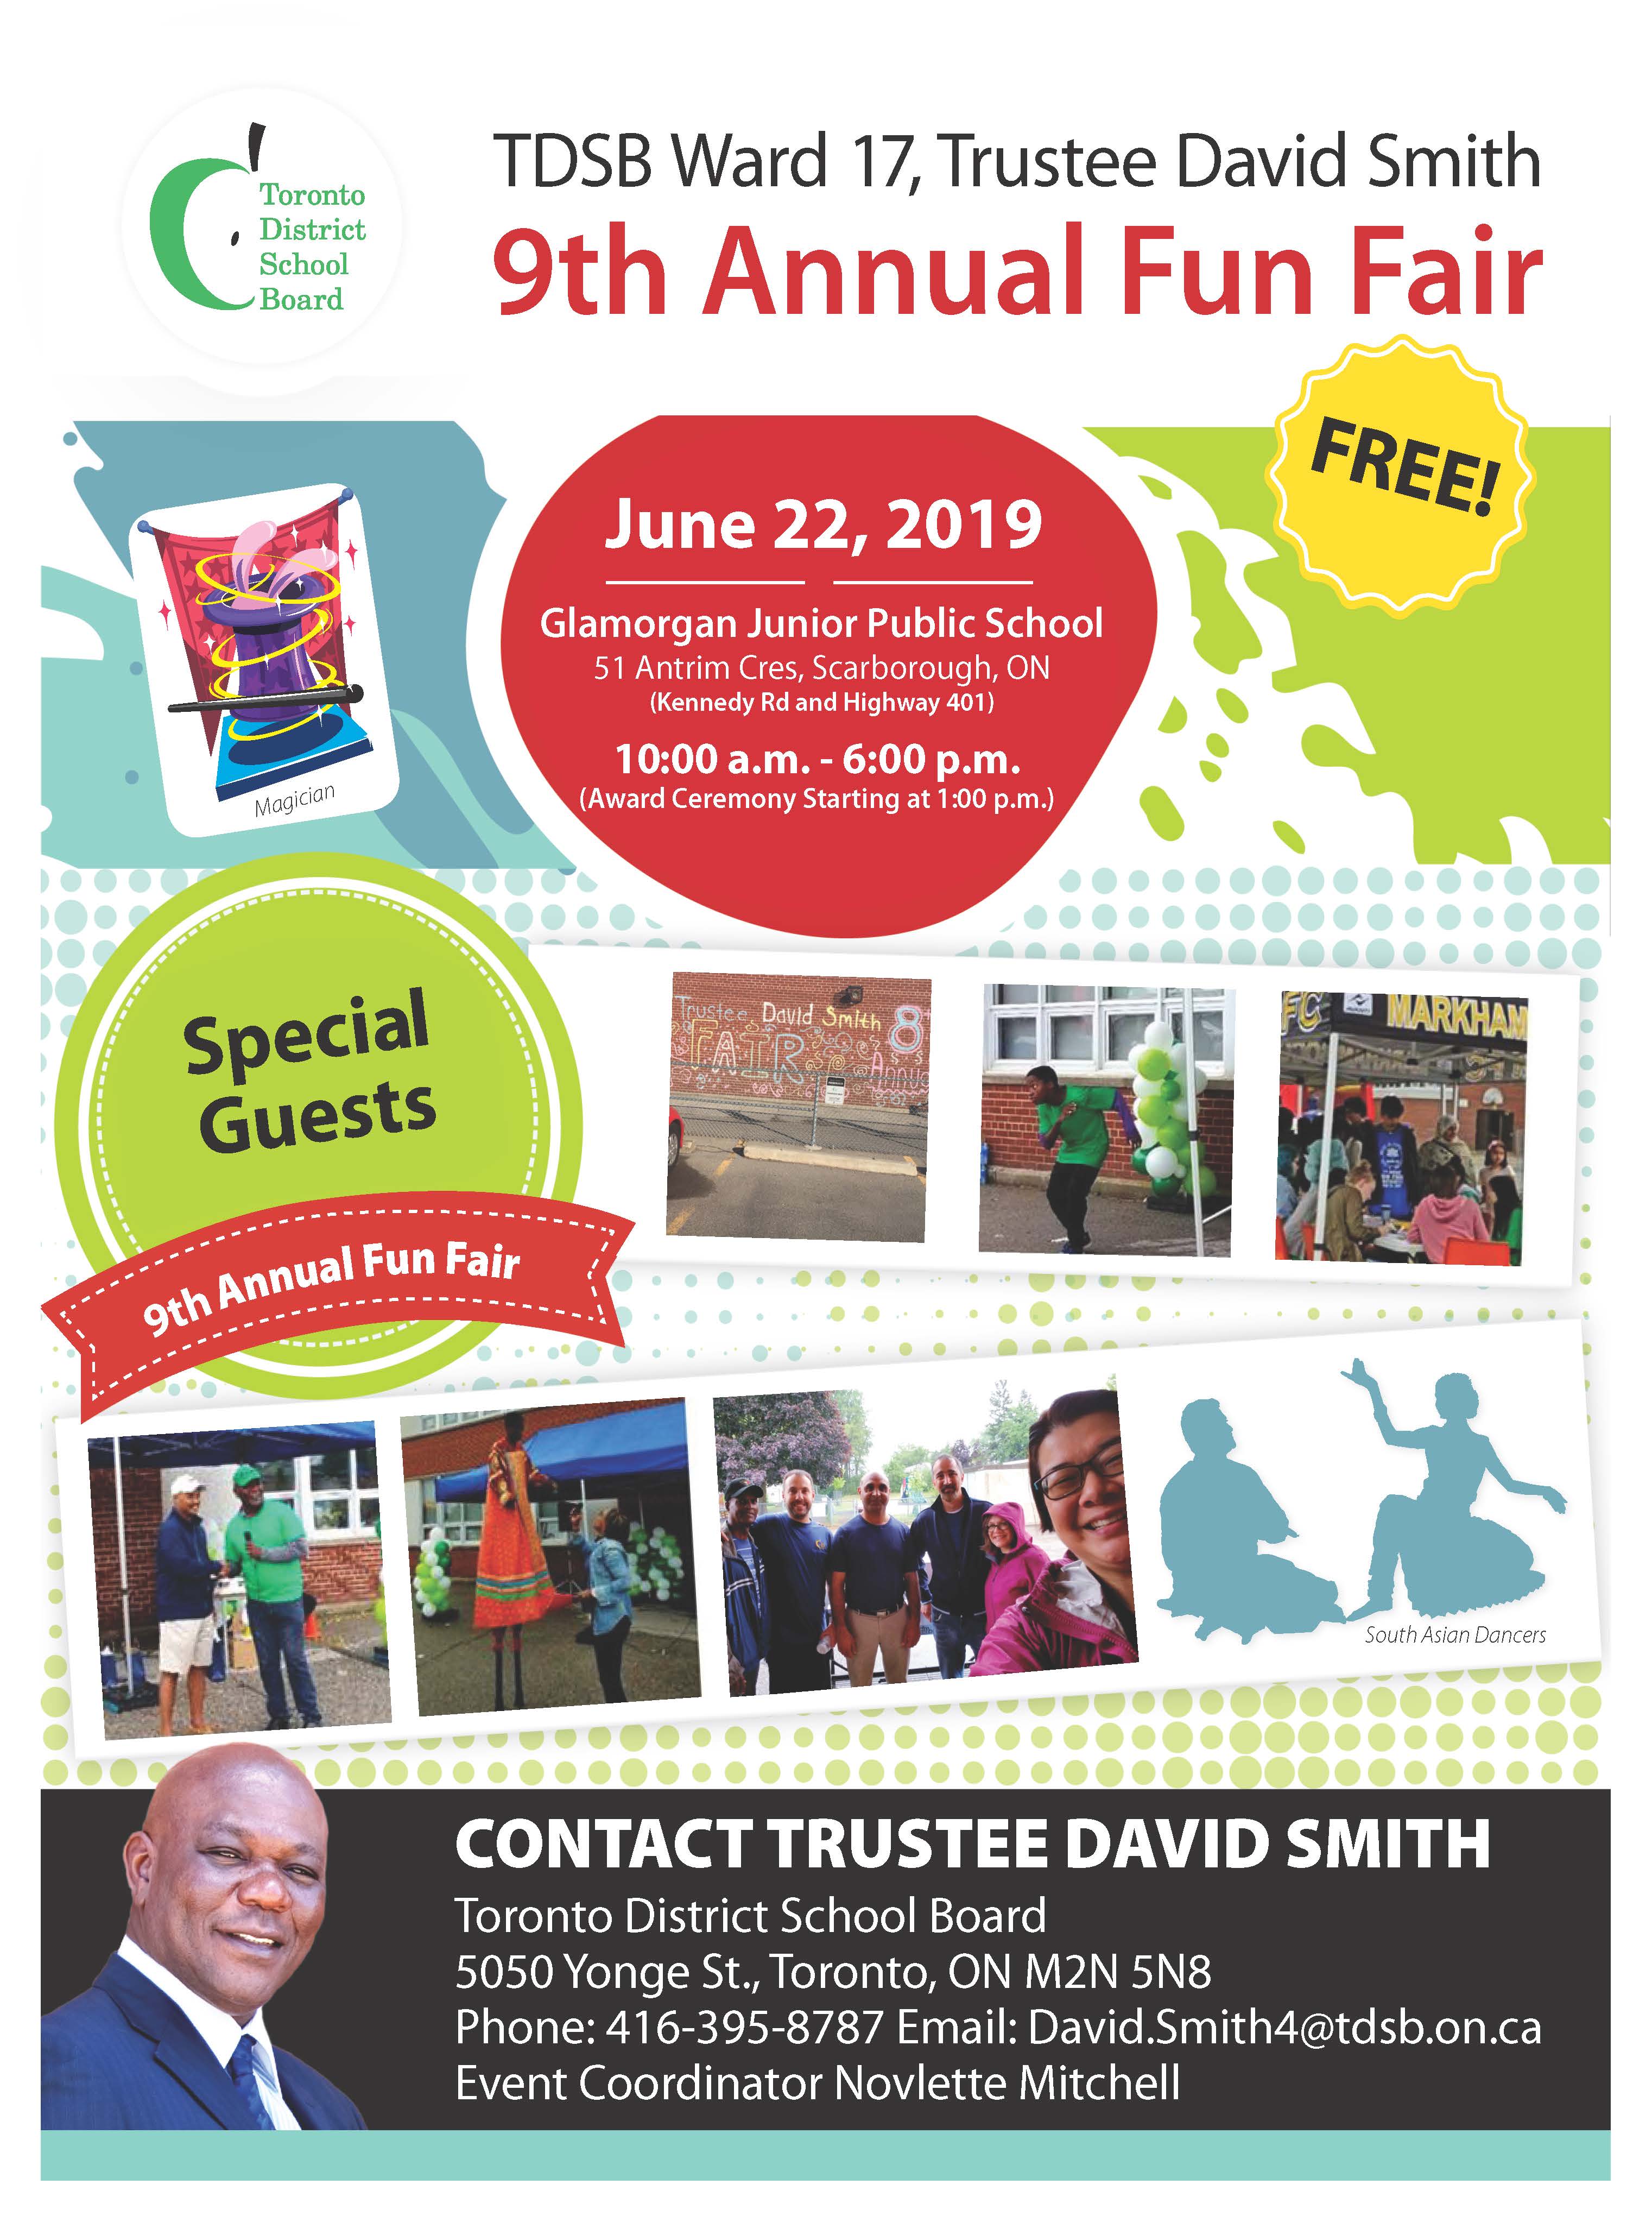 TDSB Ward 17, Trustee David Smith 9th Annual Fun Fair